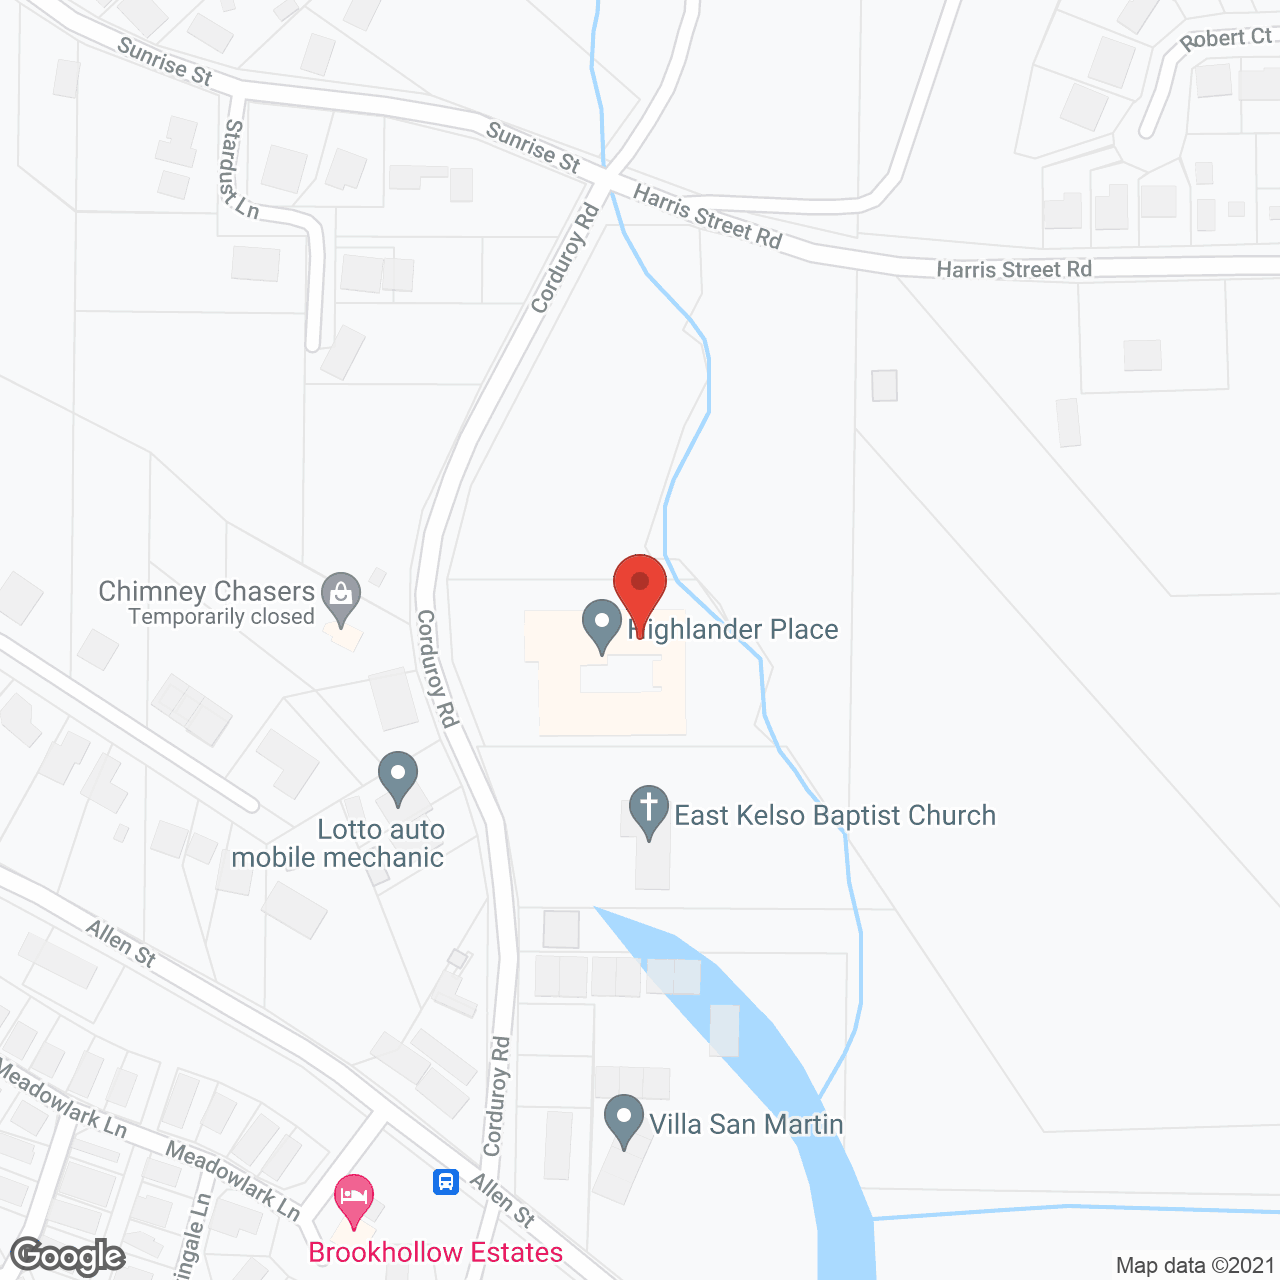 Highlander Place in google map